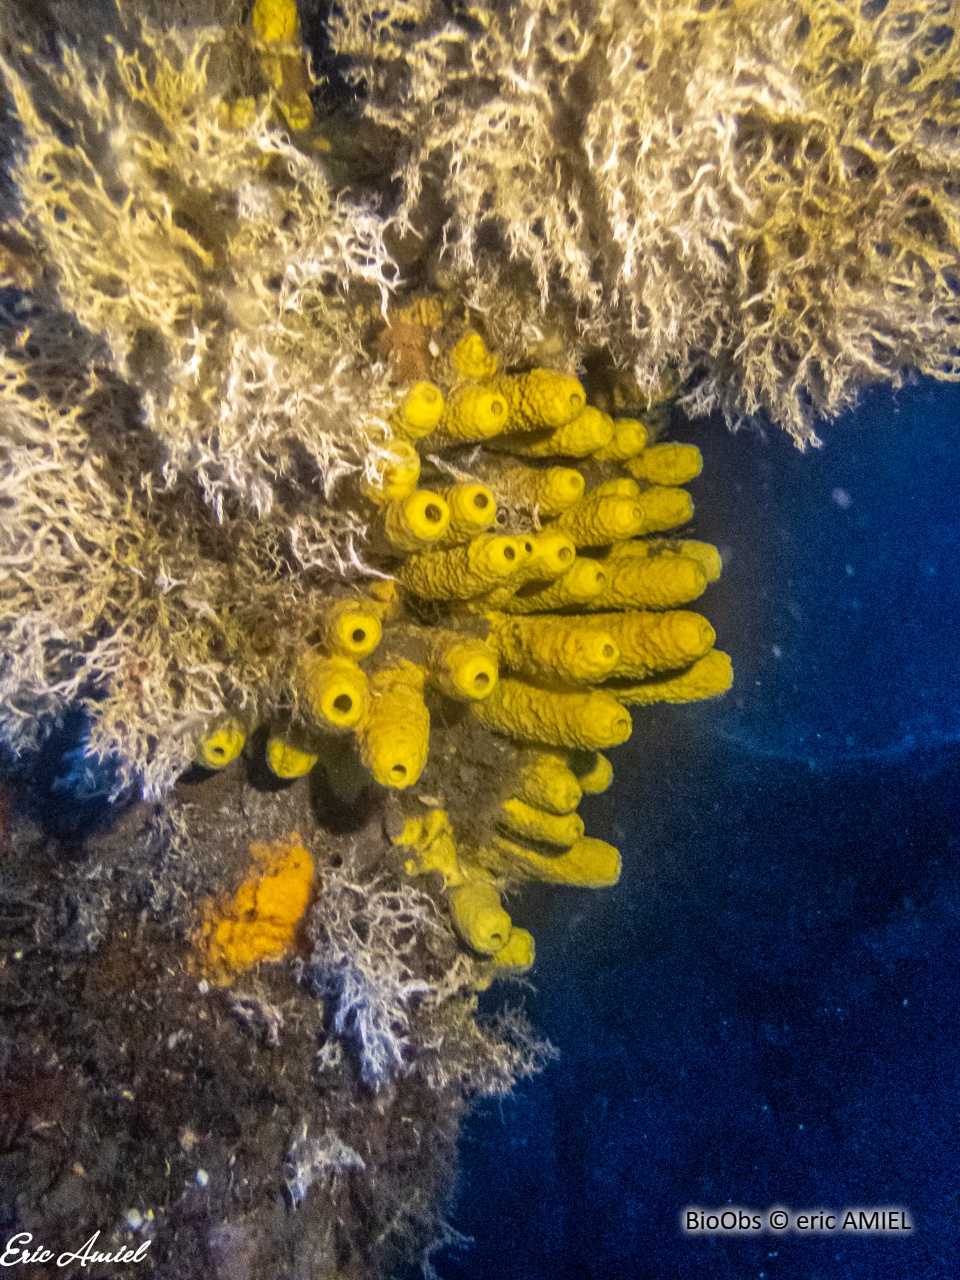 Eponge cavernicole jaune - Aplysina cavernicola - eric AMIEL - BioObs